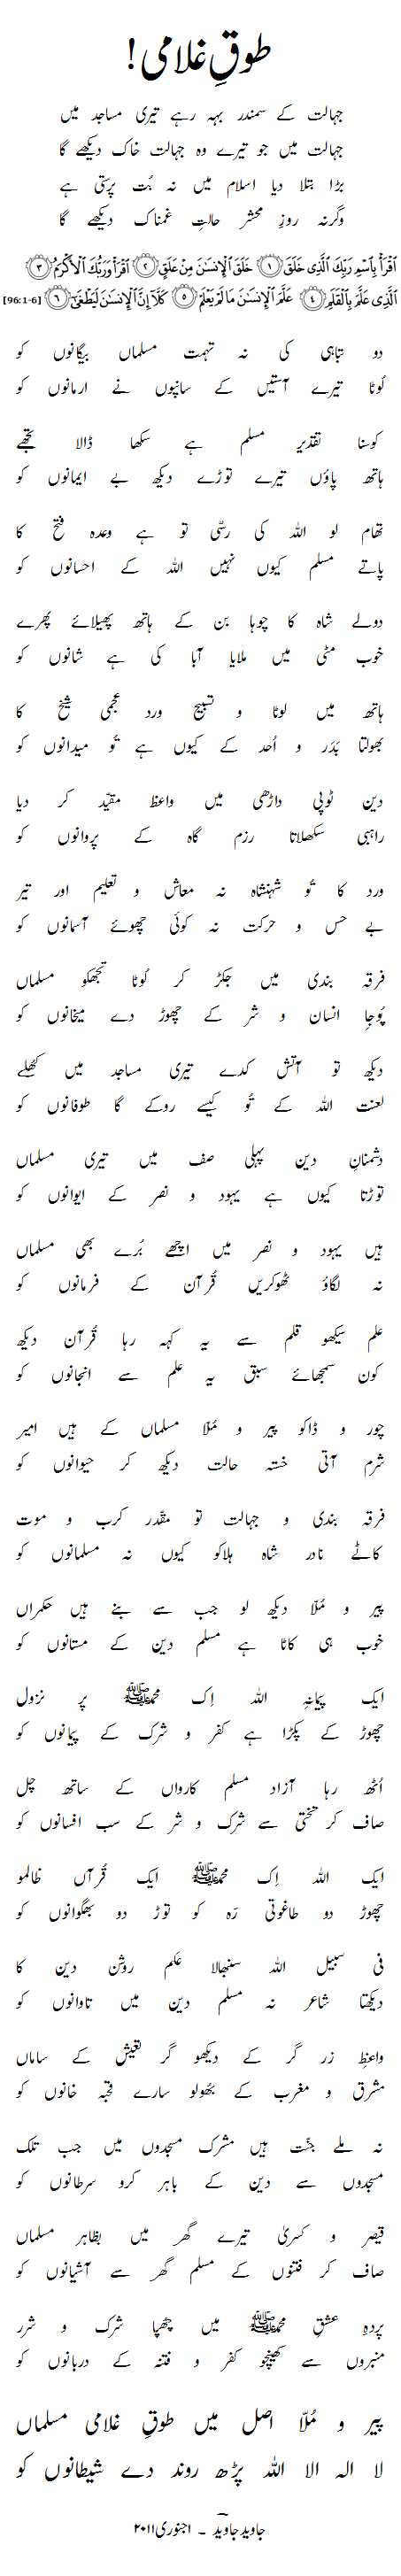 touq-e-ghulami poem